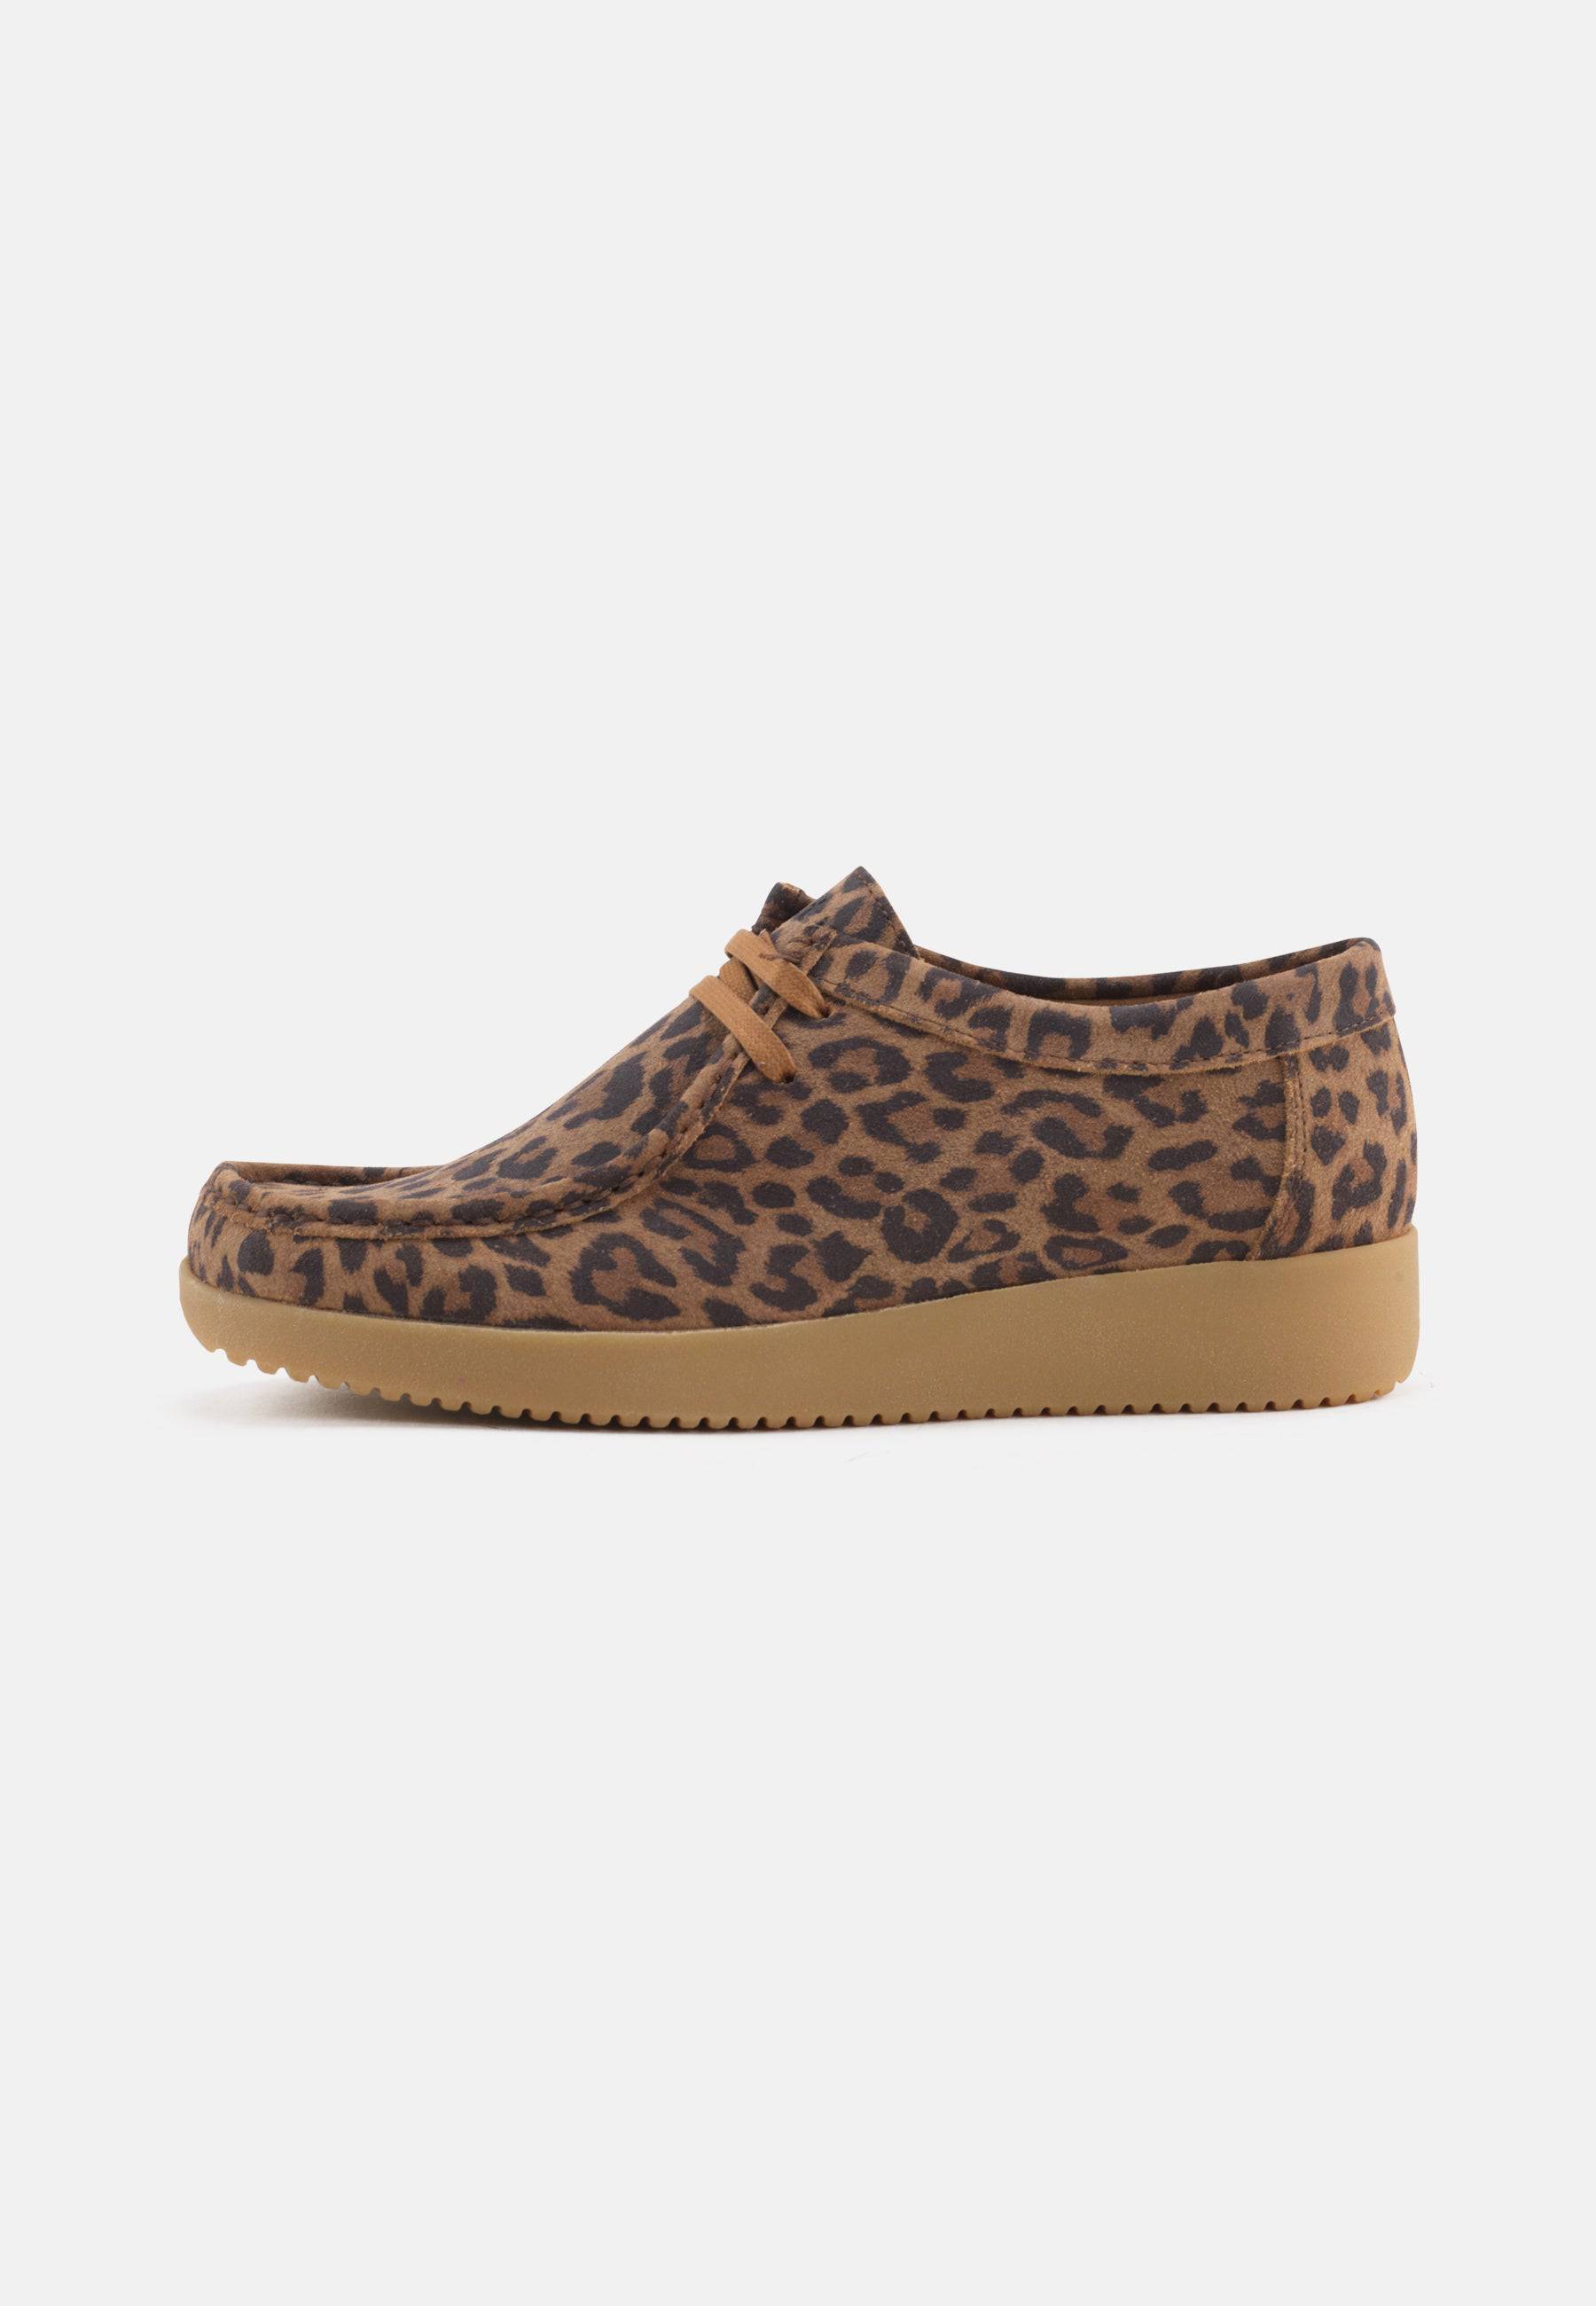 Alba Shoes Wildleder-Print – Leopard